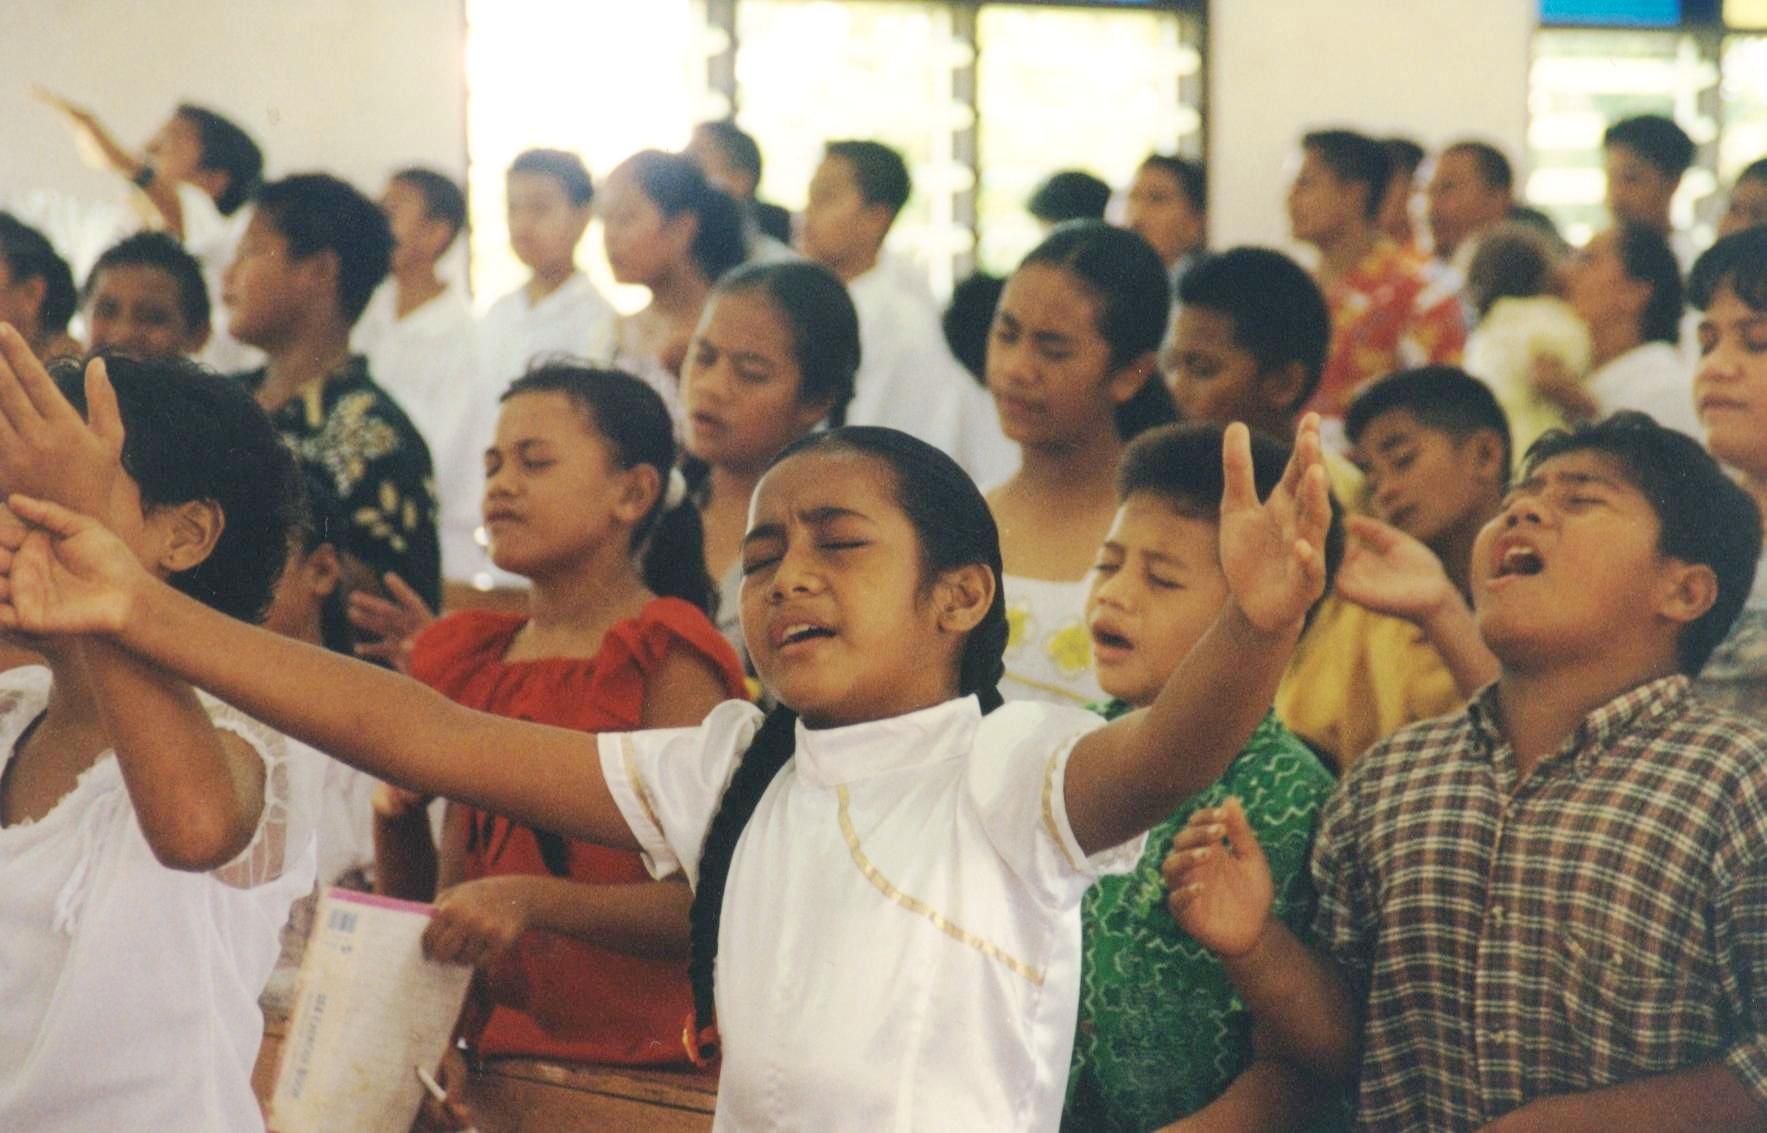 A group of Samoan kids worshiping.